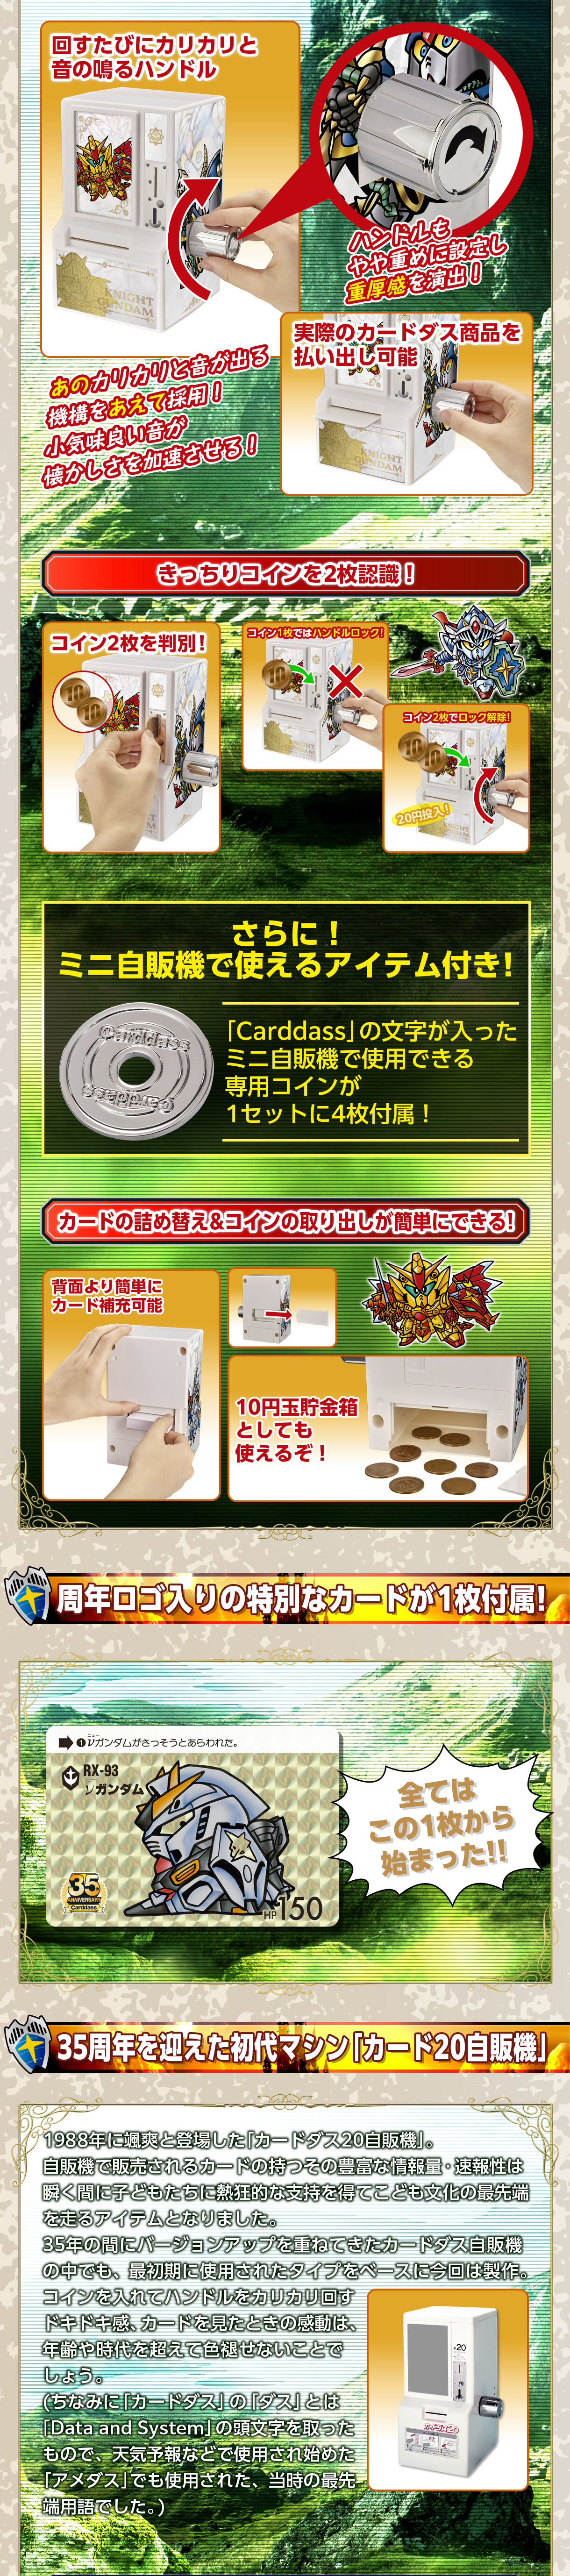 35th Anniversary Mini Carddass Vending Machine(SD Gundam Gaiden)